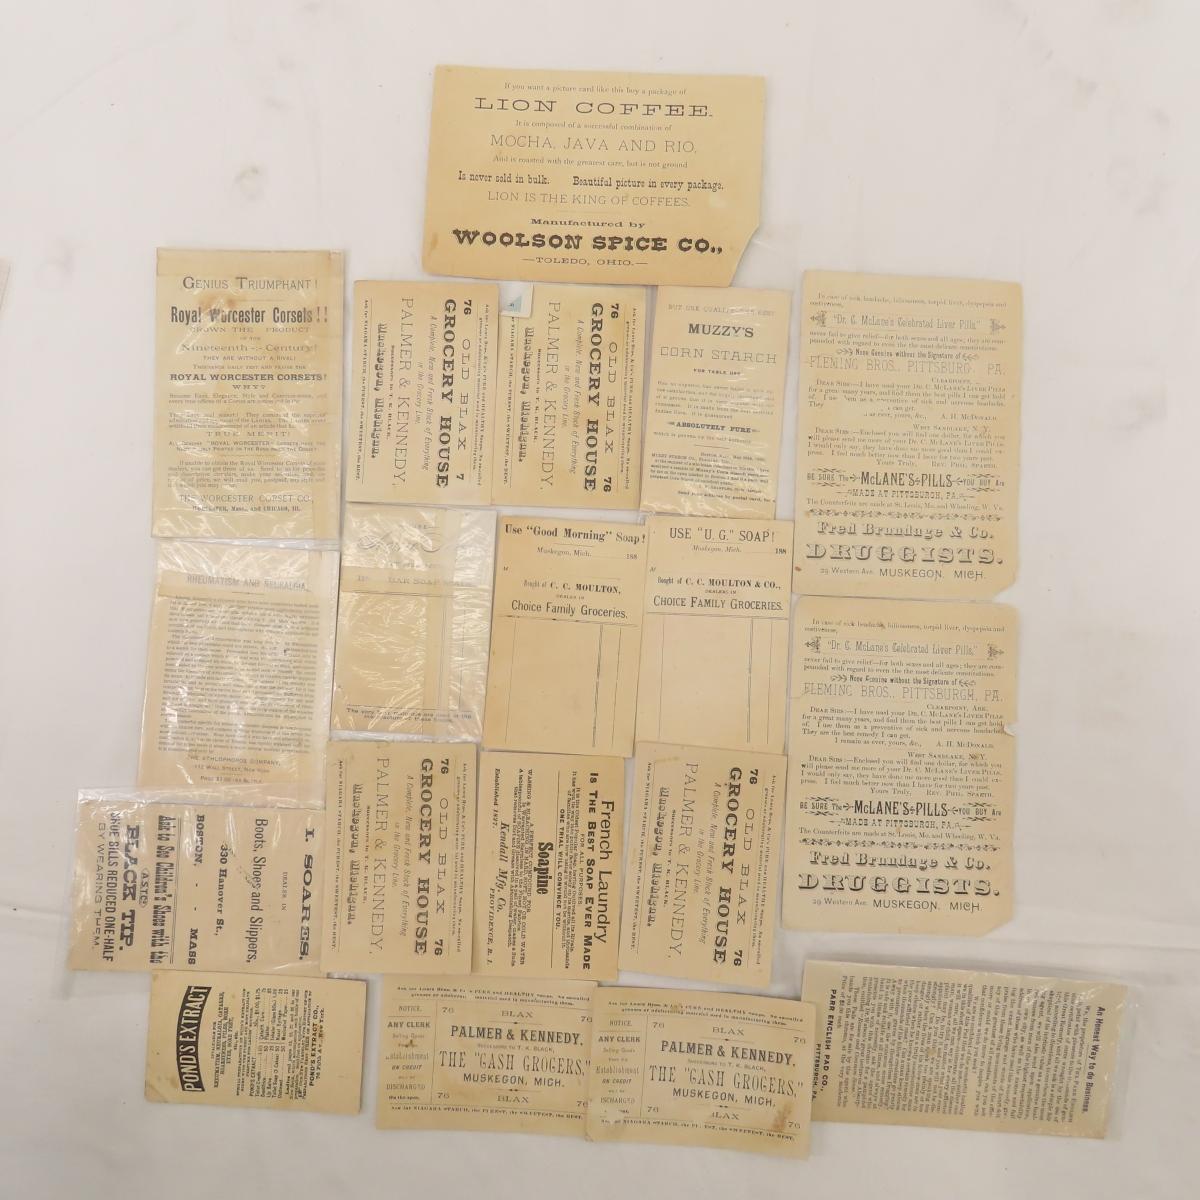 Antique Trade Cards, Tobacco Cards and Ephemera